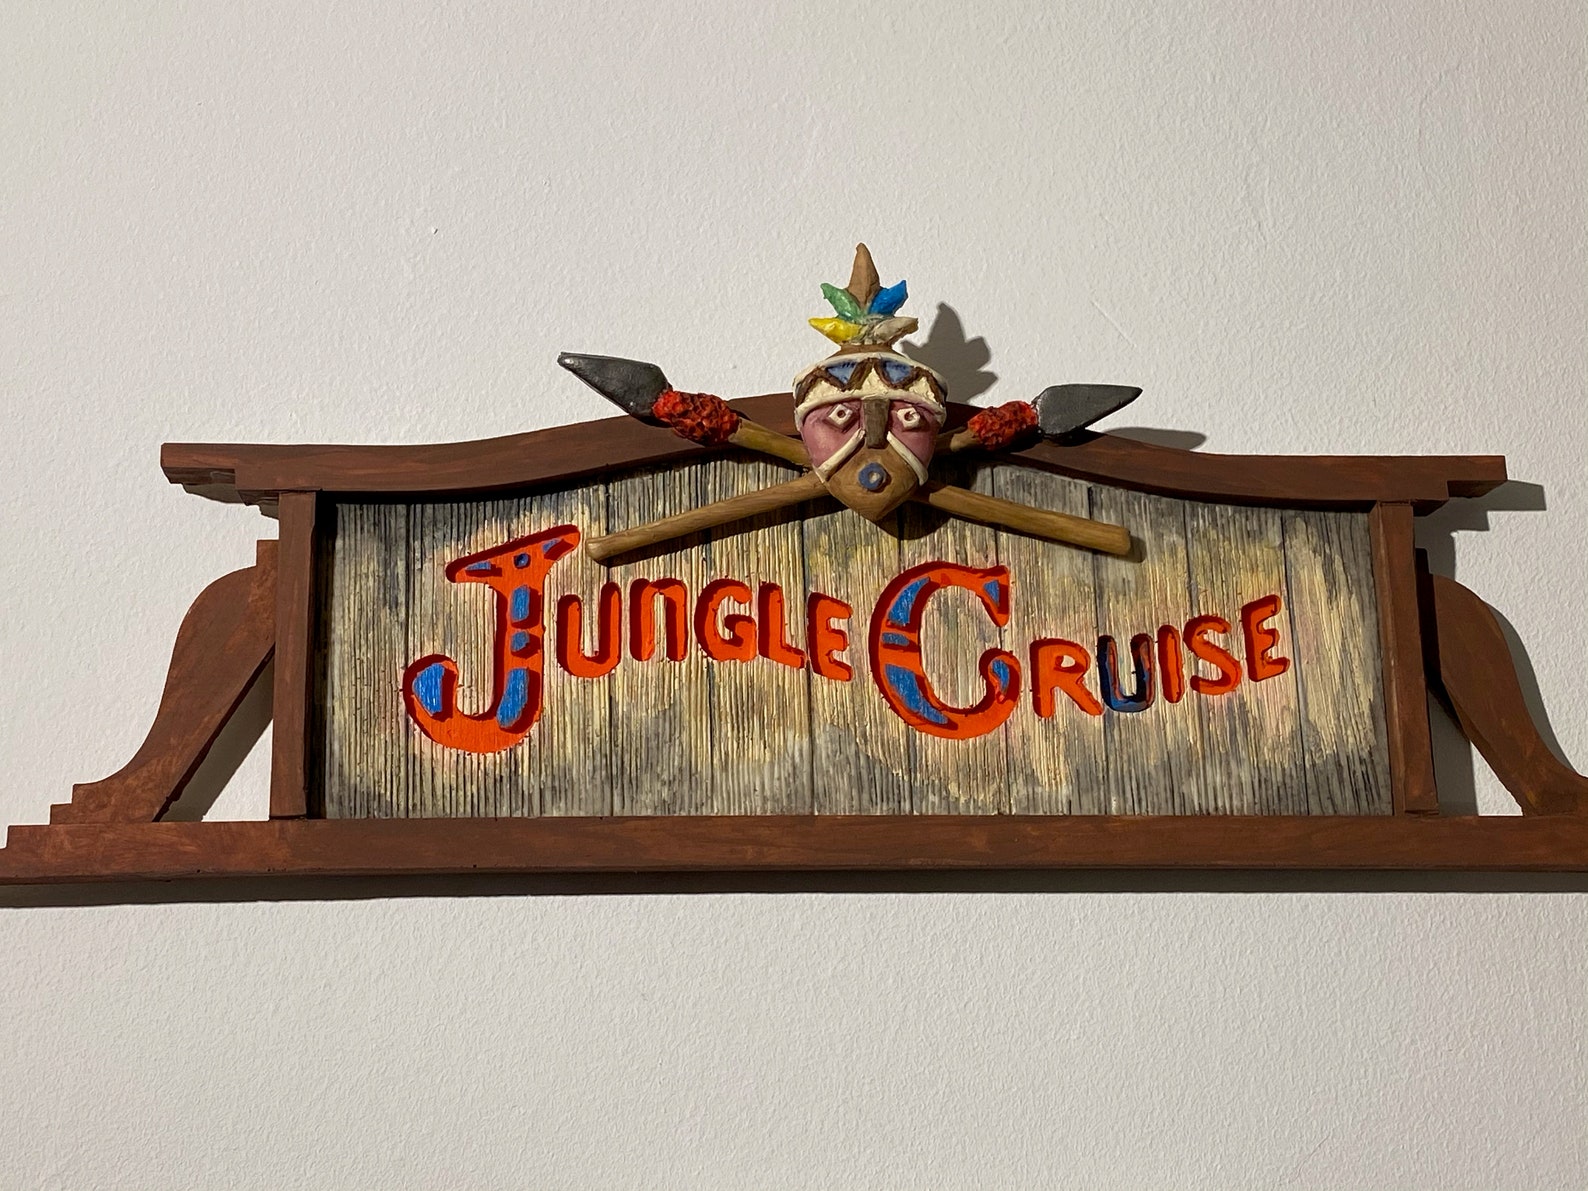 jungle cruise sign